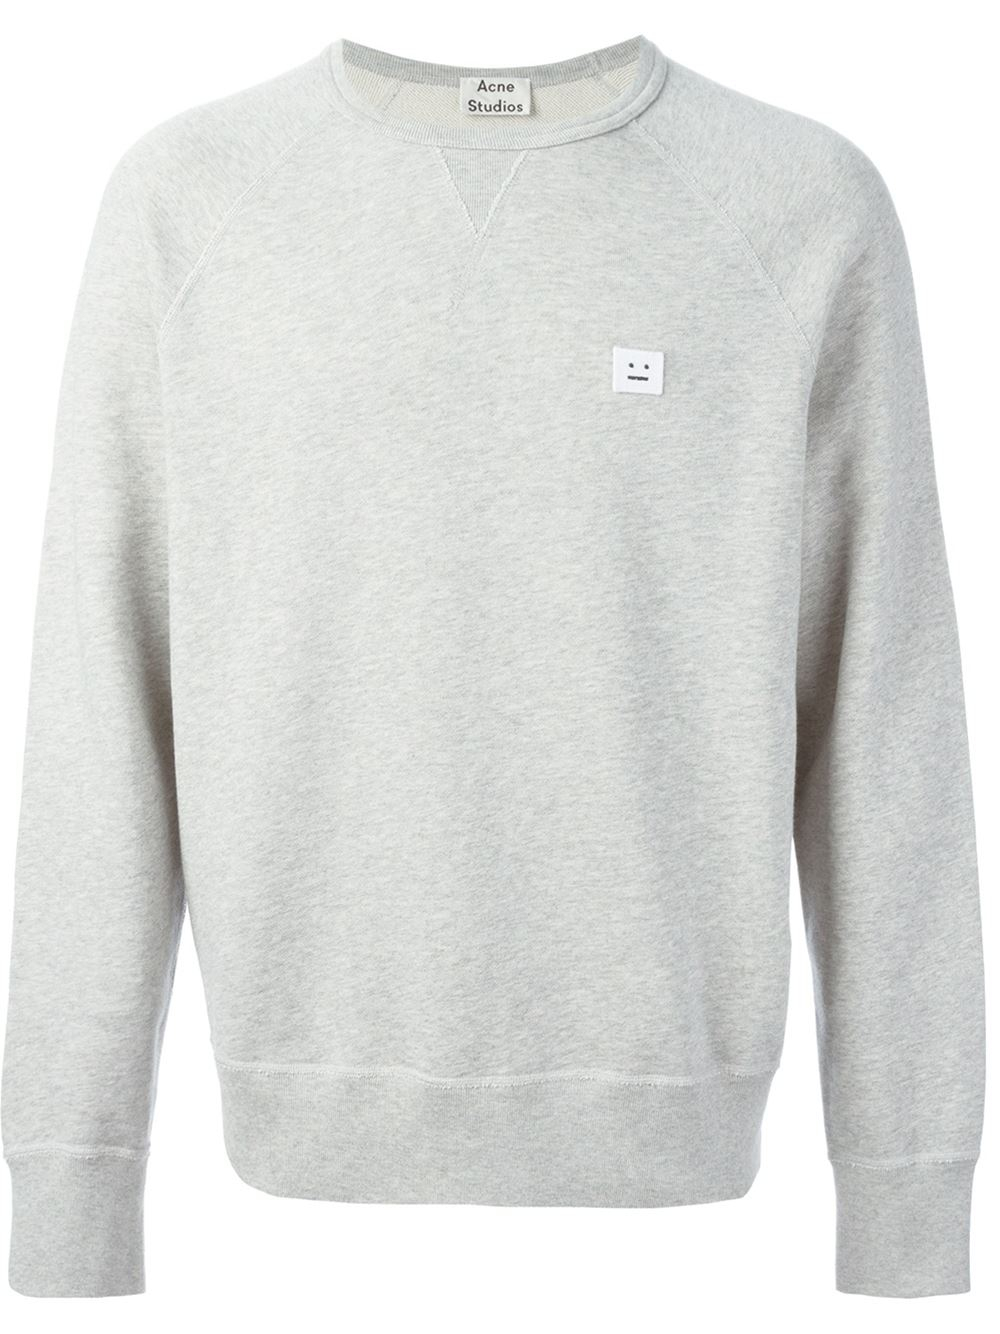 Acne Studios College Face Sweatshirt in Gray for Men - Lyst